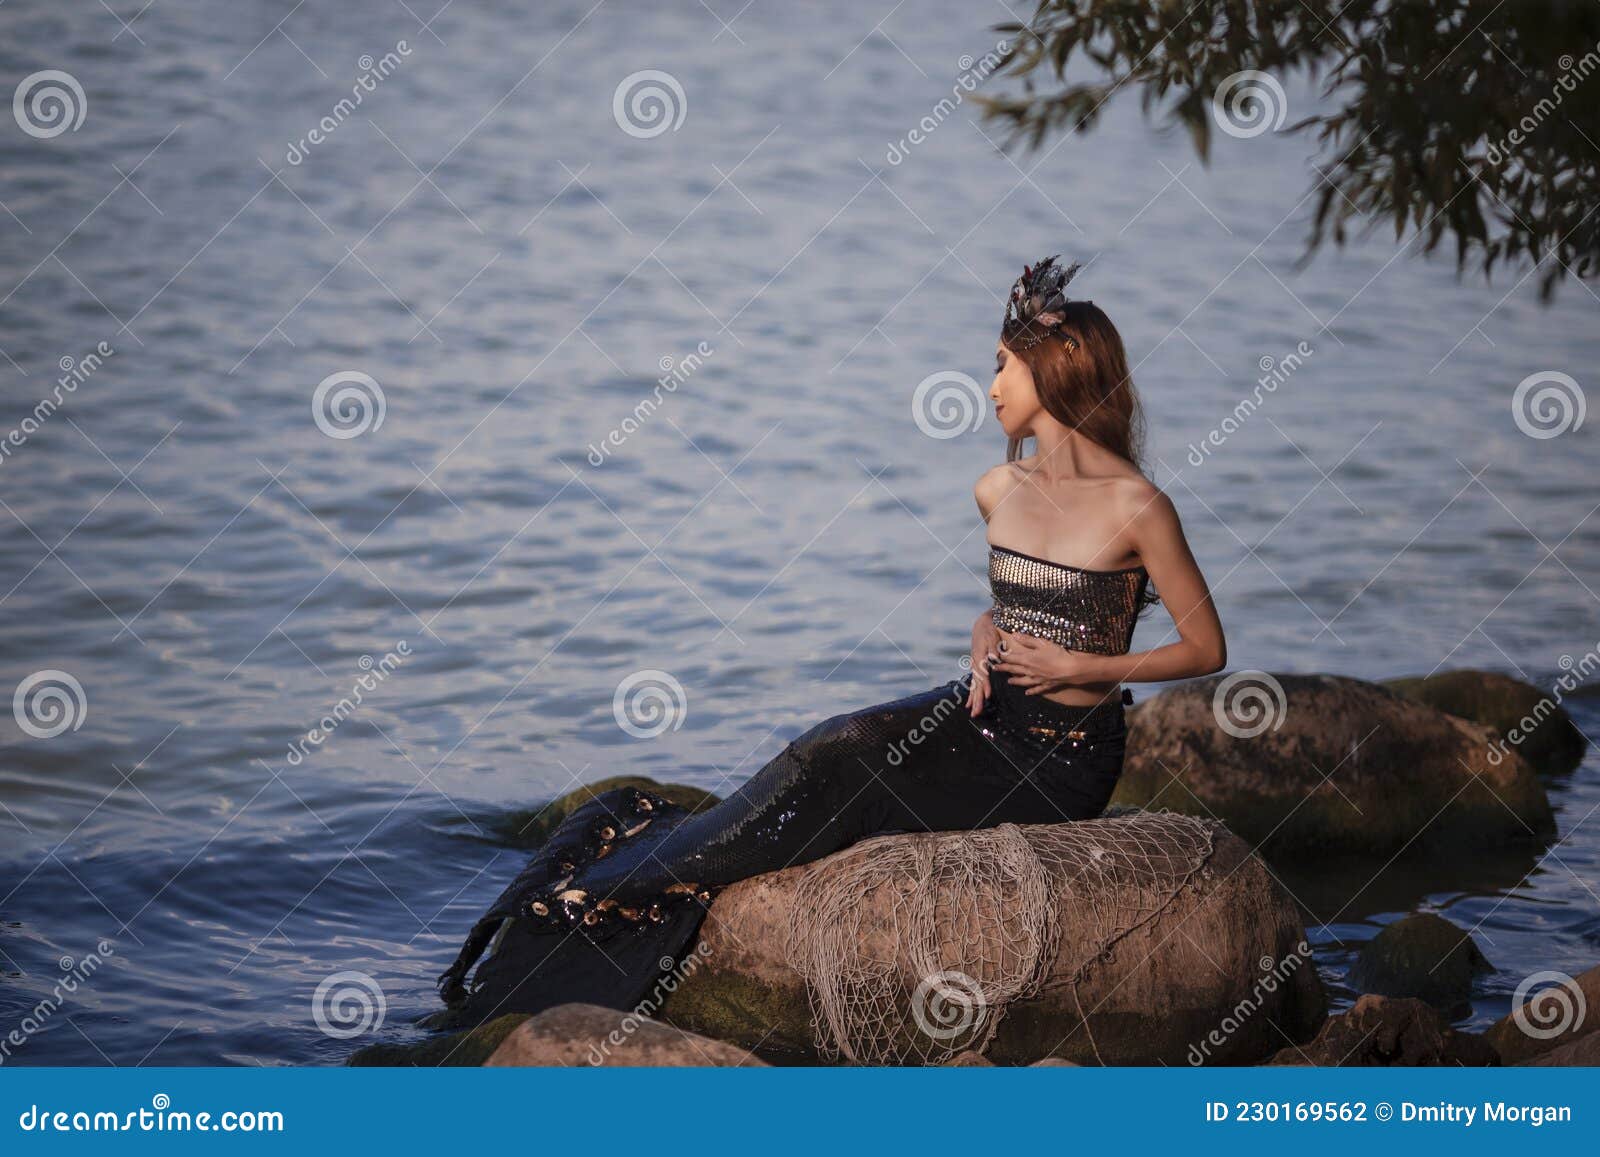 Mermaid Lady in Net at Sea Coast on Rocks Wearing Seashell